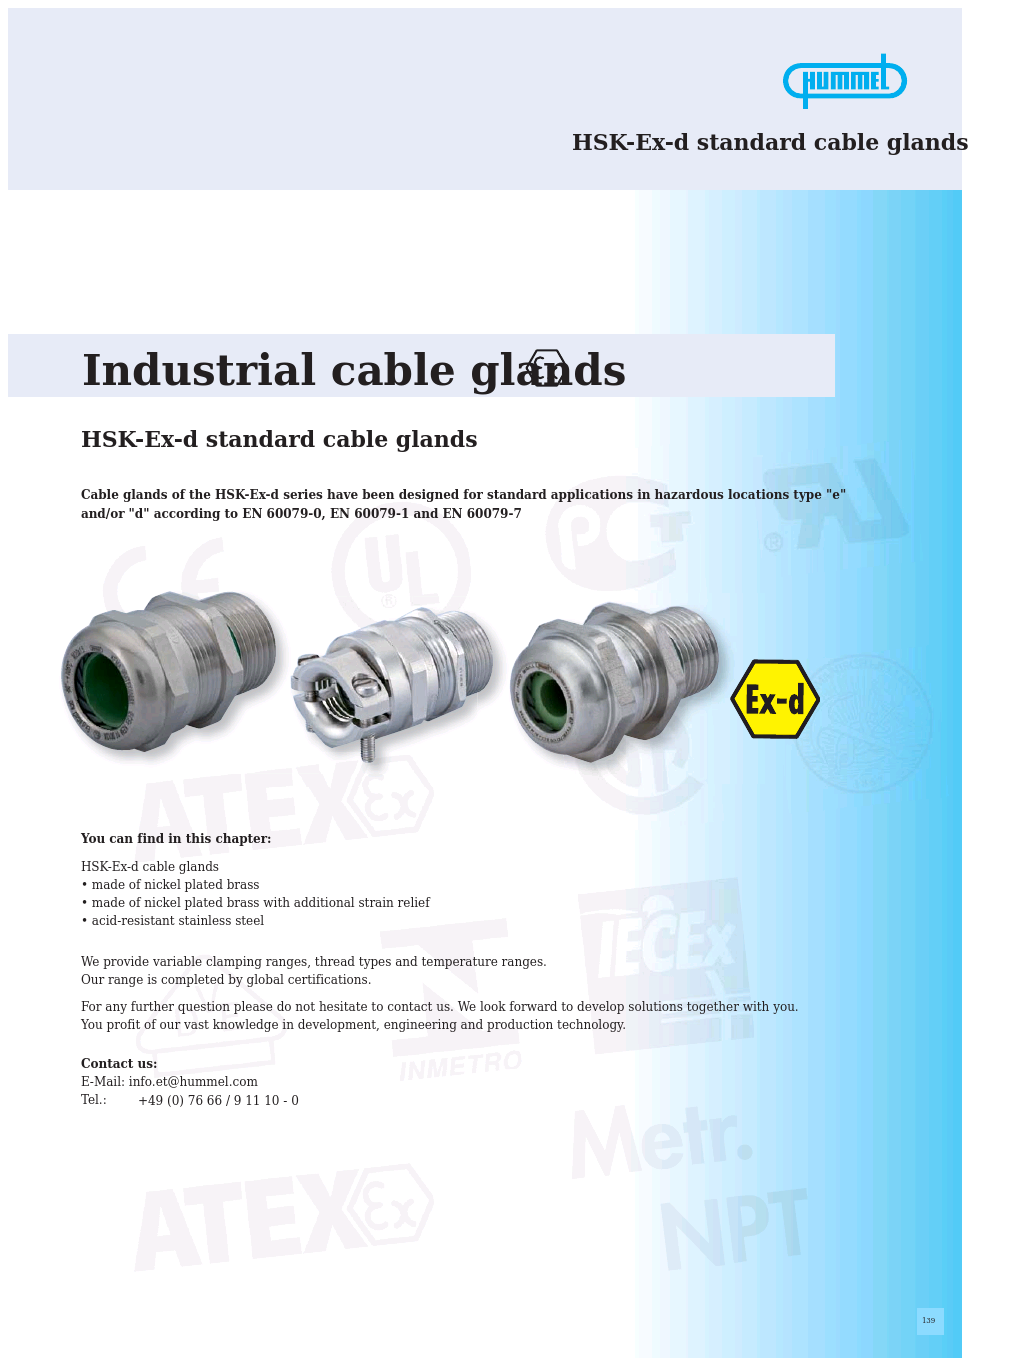 Hummel Cable Glands - Ex-d Standard for Hazardous Areas